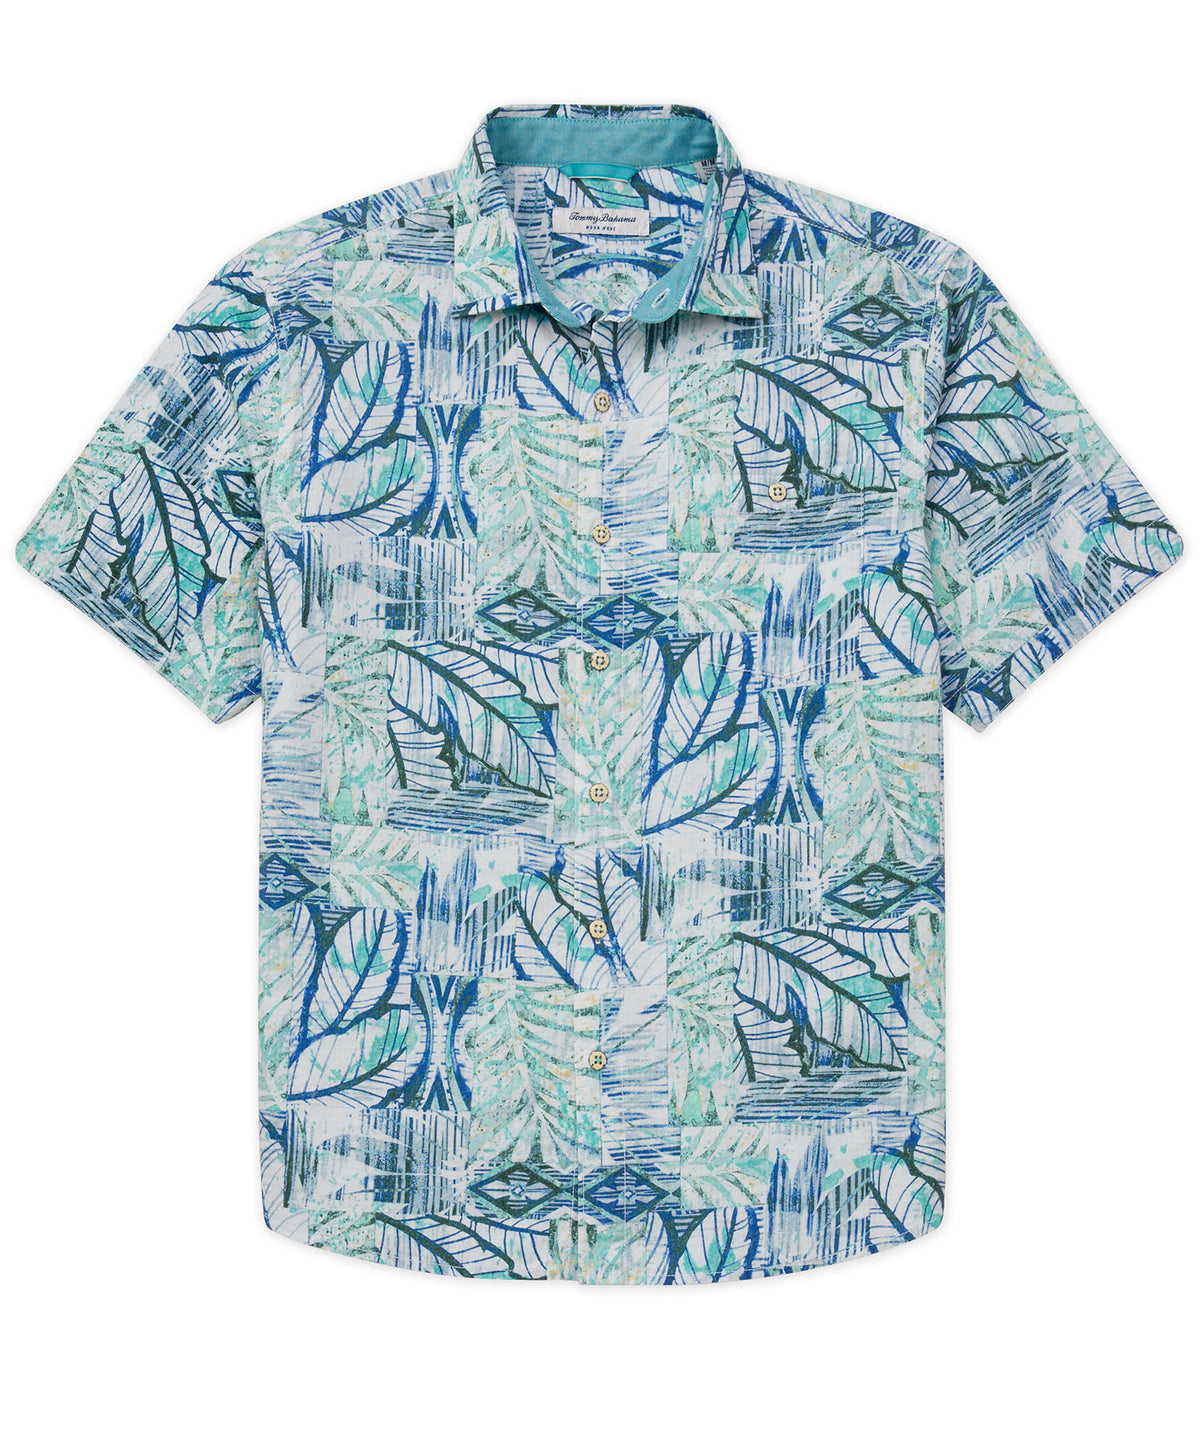 Tommy Bahama Short Sleeve Nova Wave Bermuda Batik Printed Seersucker Sport Shirt, Big & Tall